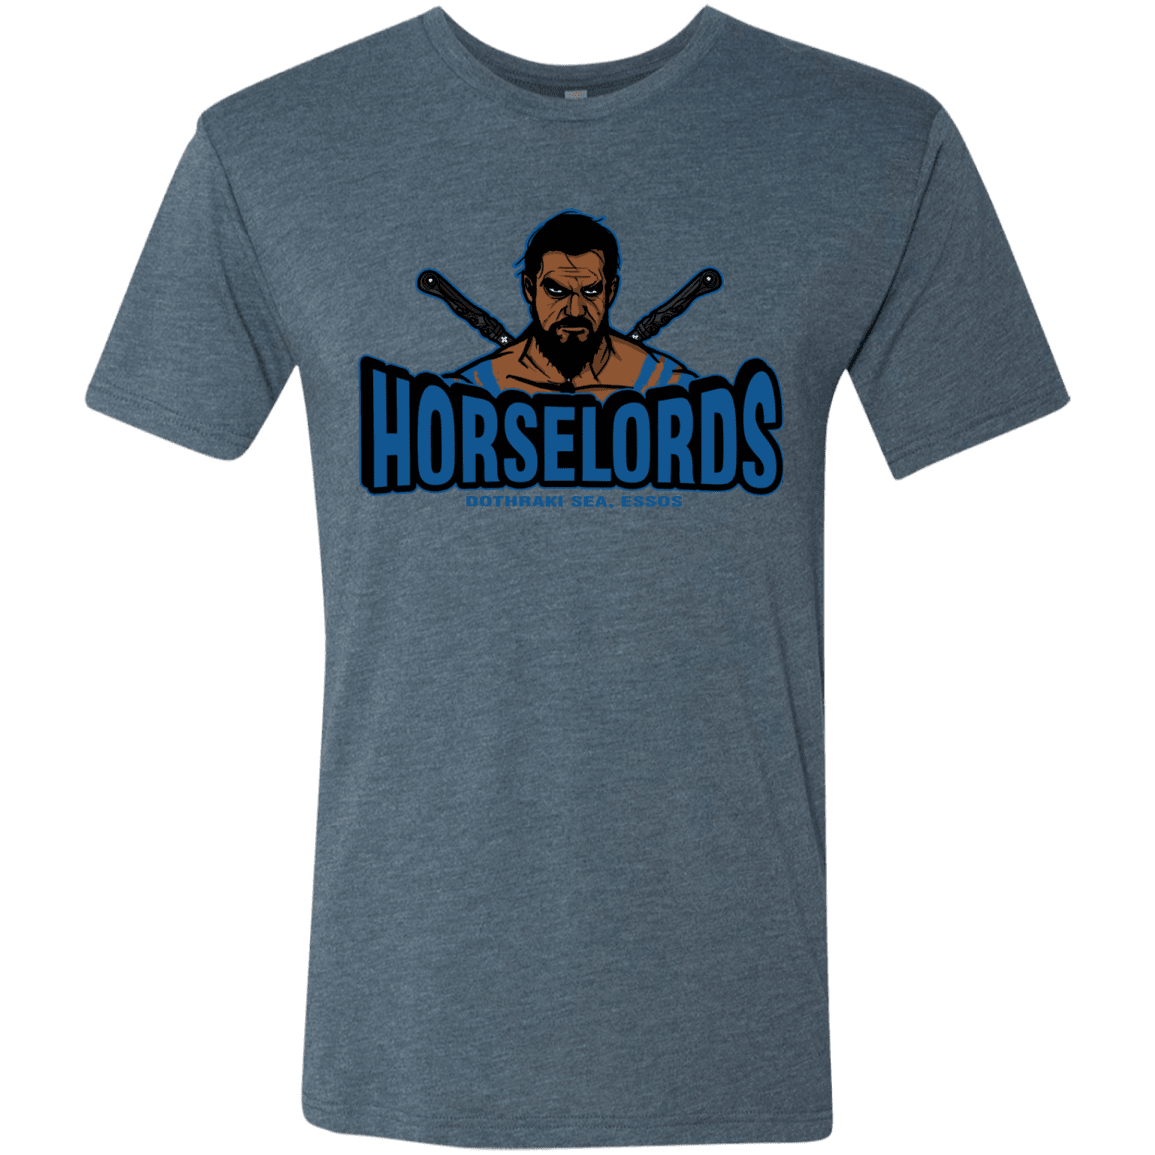 T-Shirts Indigo / S Horse Lords Men's Triblend T-Shirt